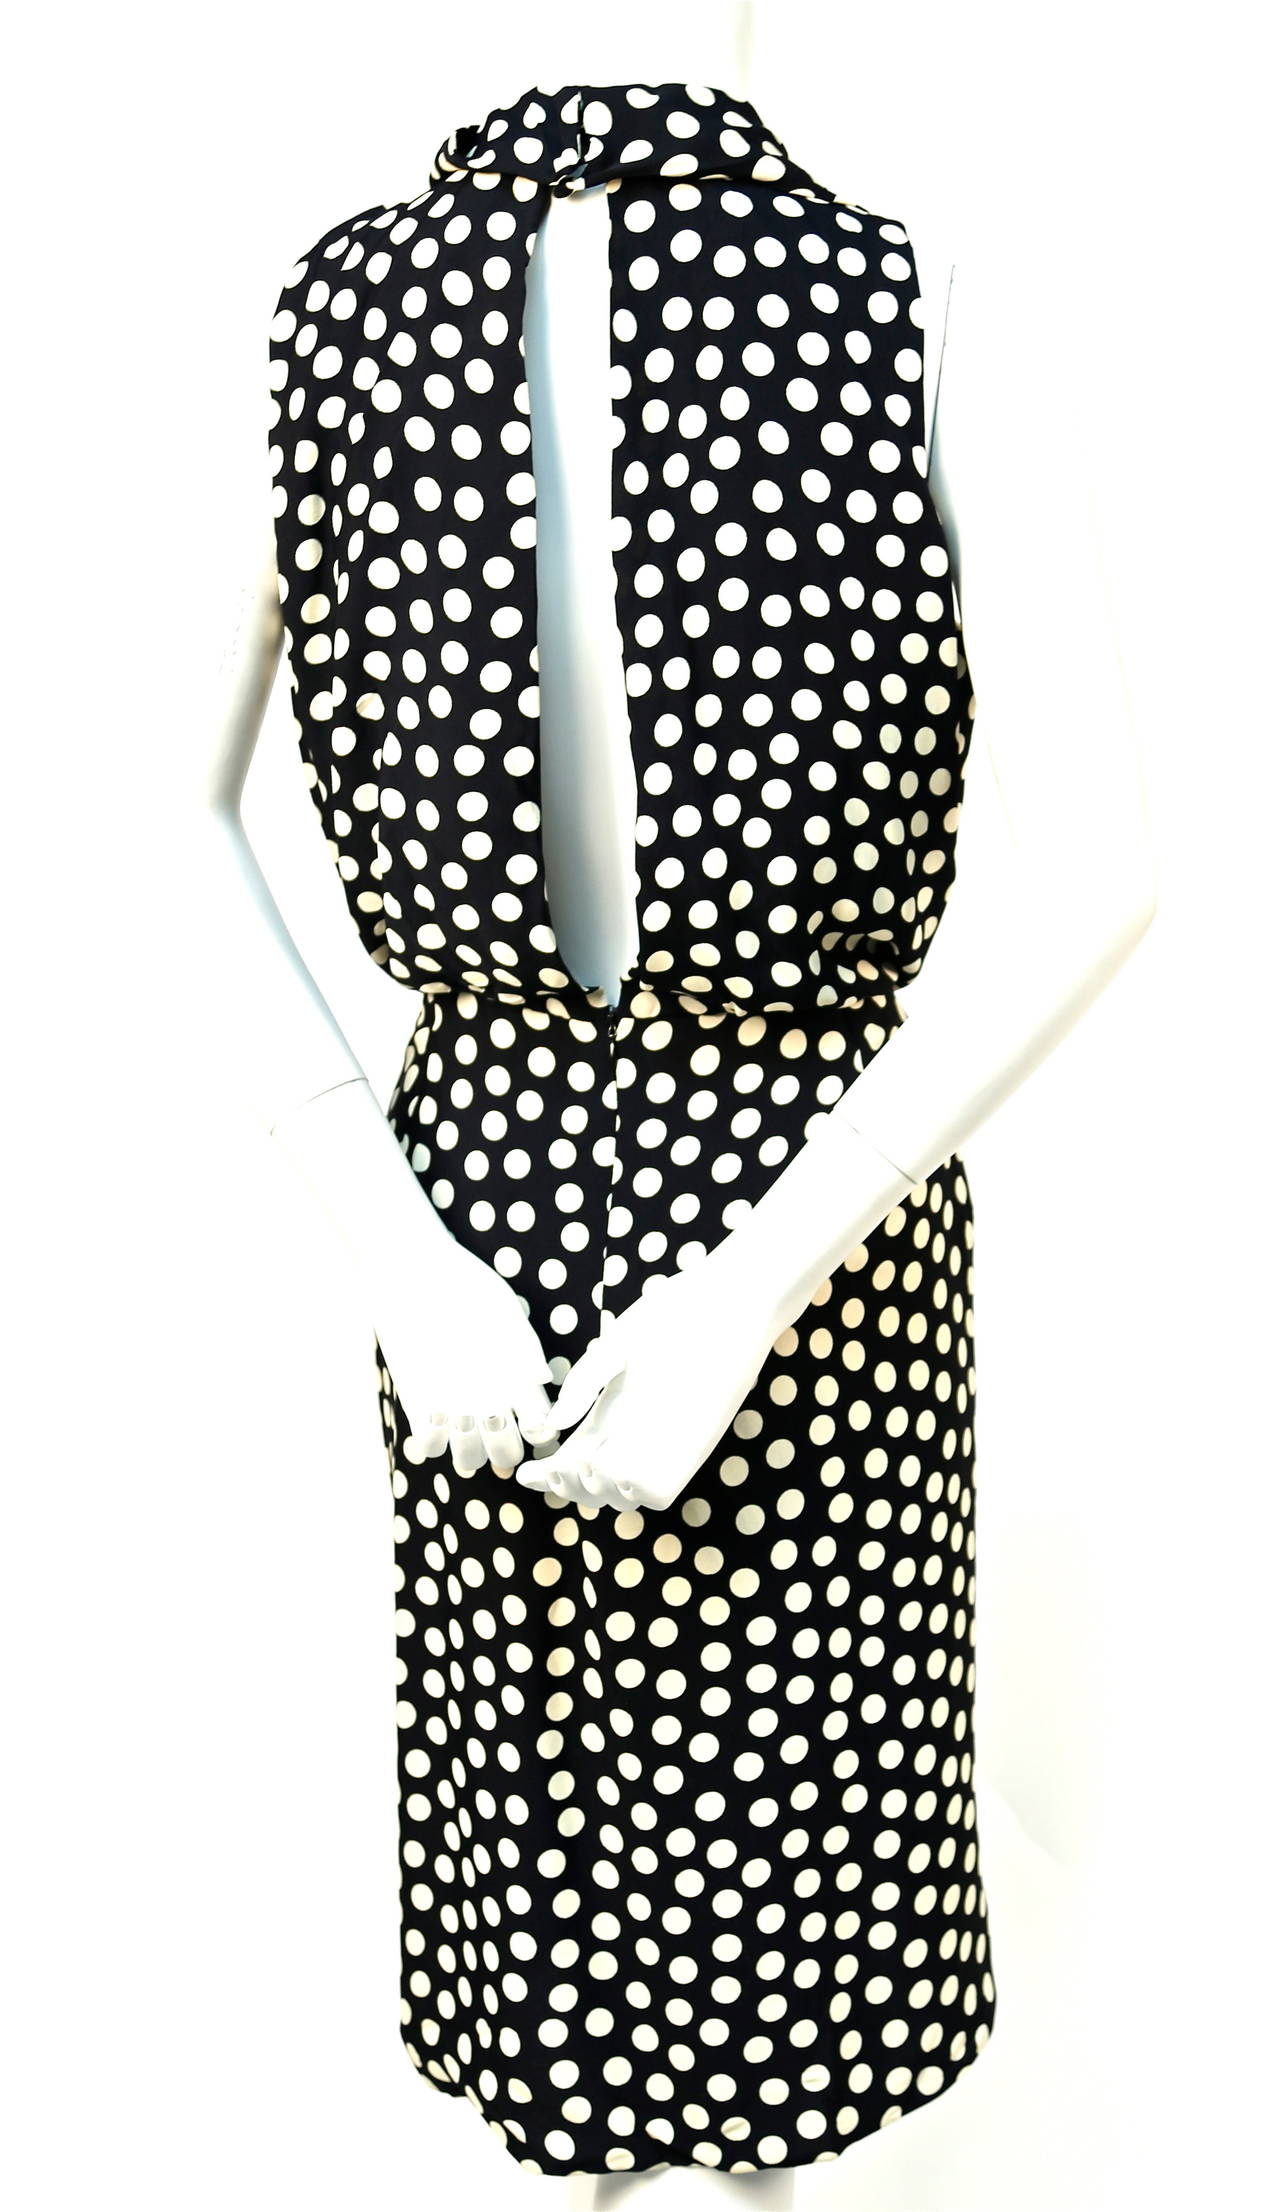 Women's CHRISTIAN LACROIX silk polka dot dress with asymmetrical hemline